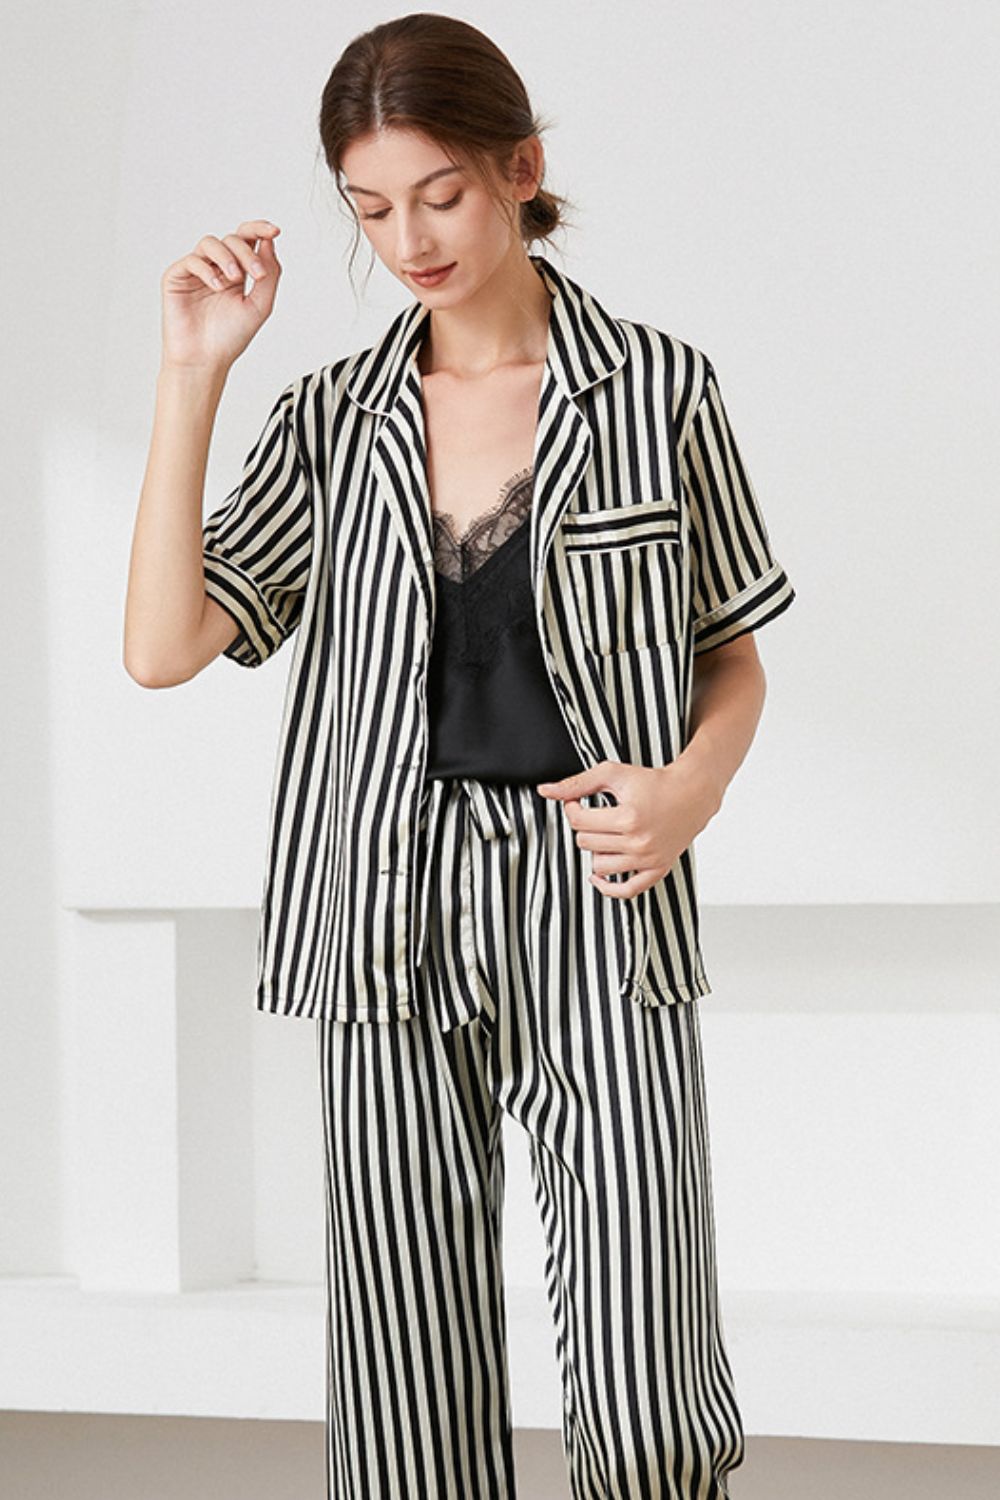 Women’s Striped Short Sleeve Shirt, Pants, and Cami Pajama Set